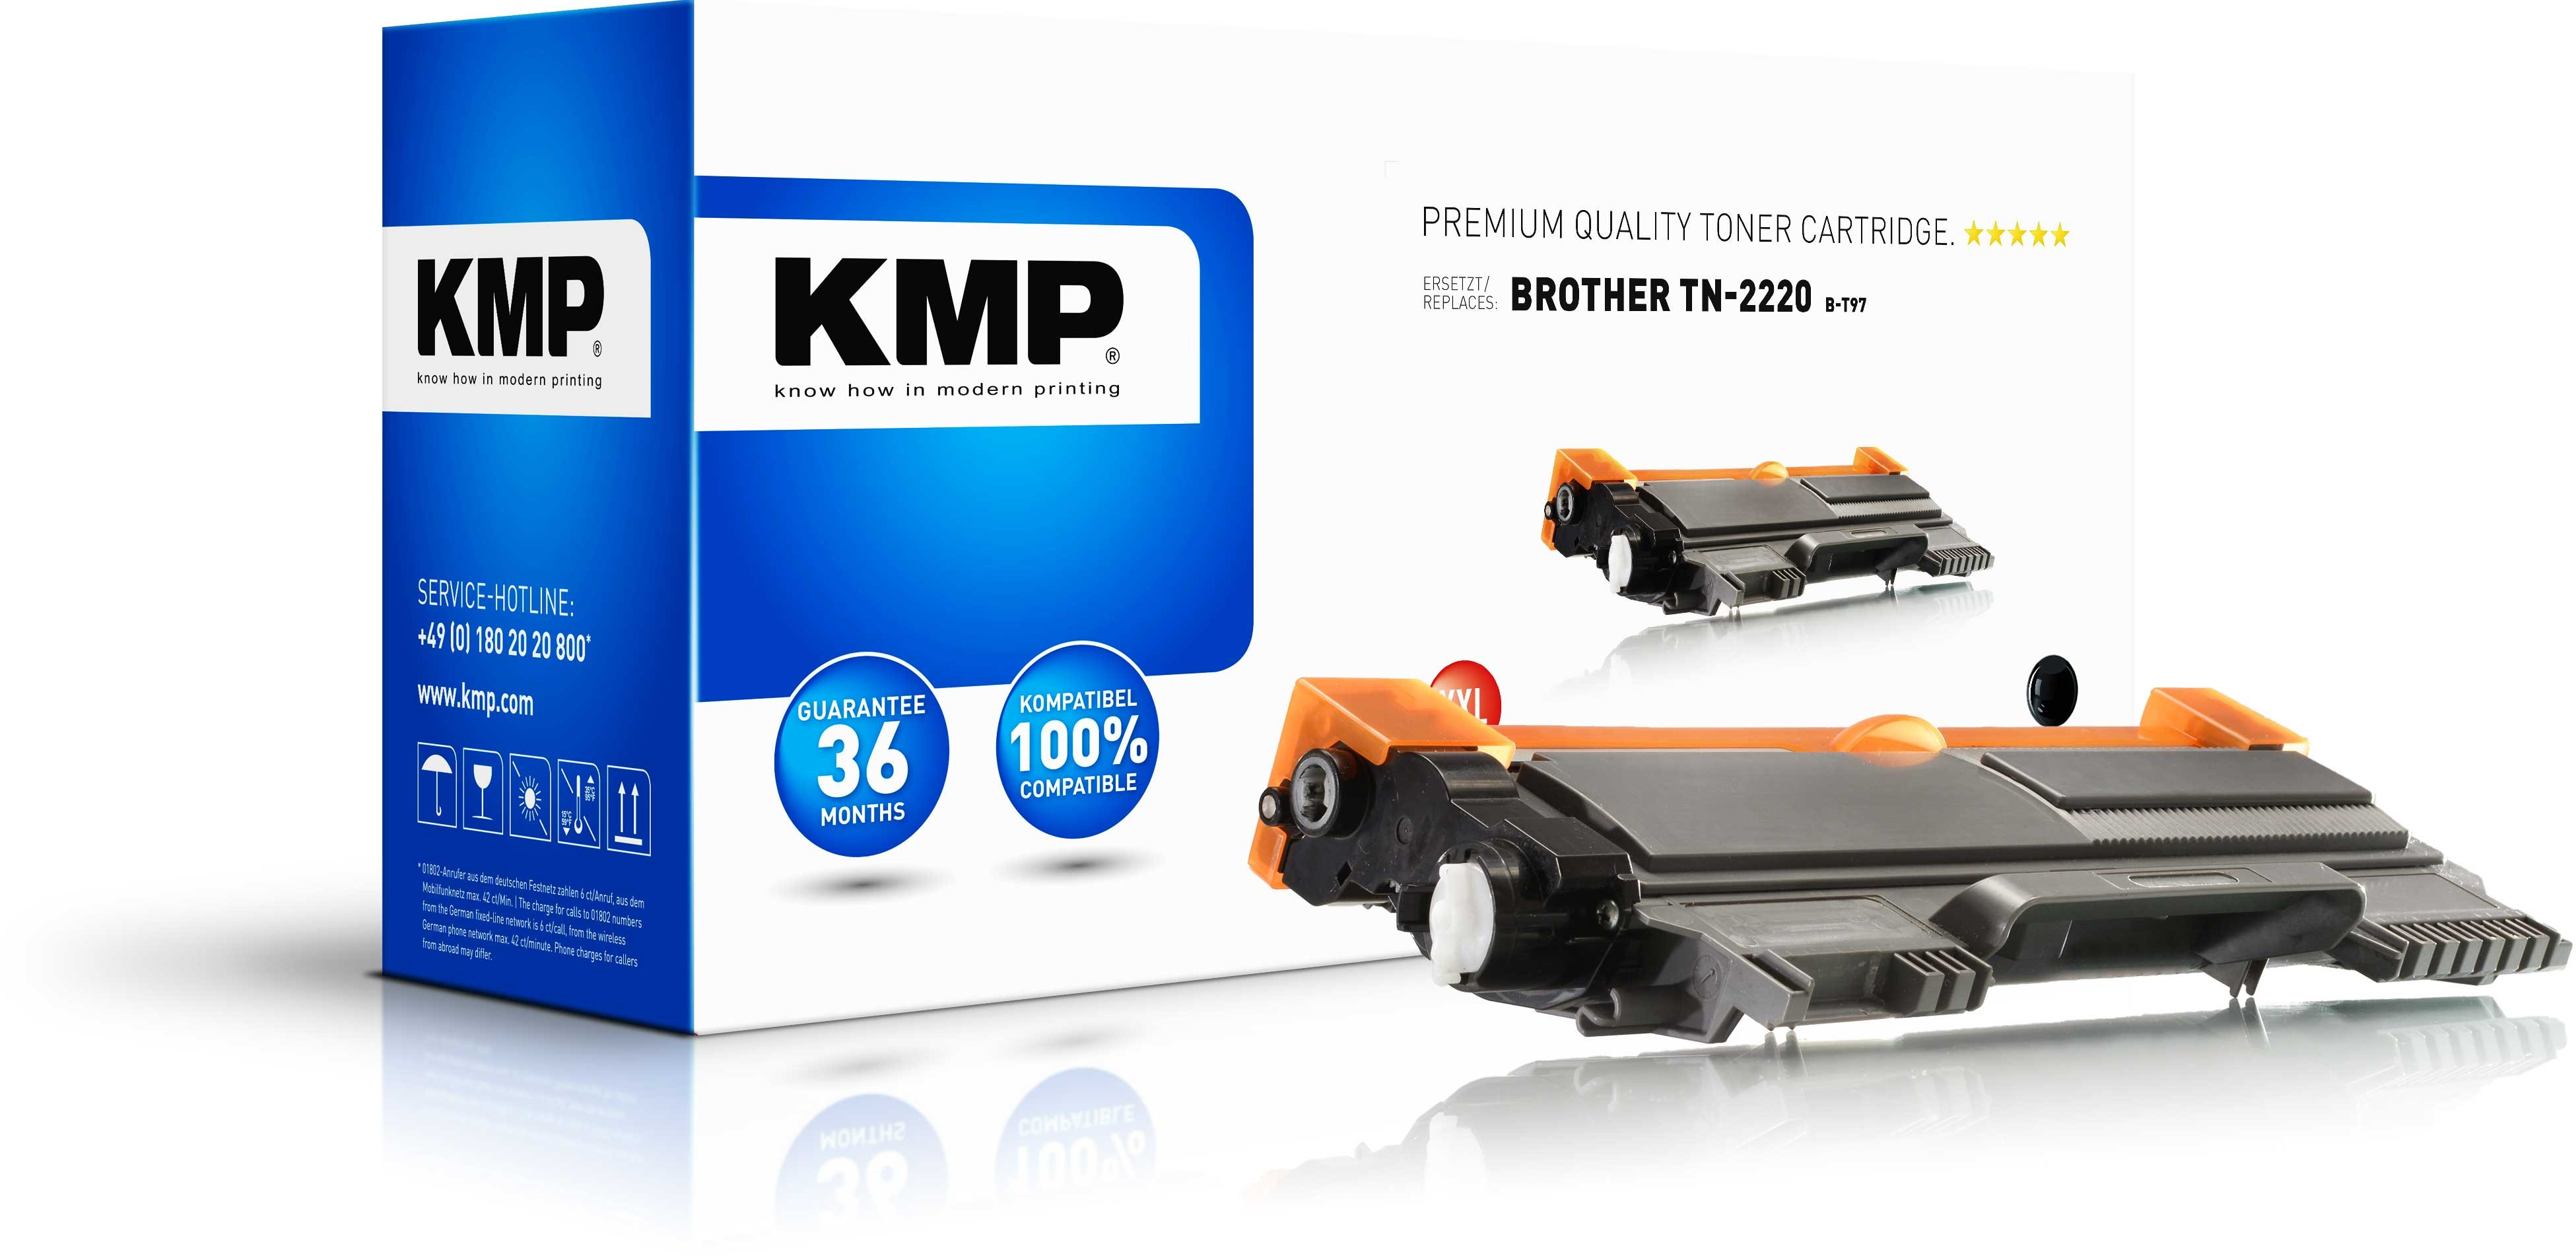 KMP 1257,5000 - 5200 Seiten - Schwarz - 1 Stück(e)